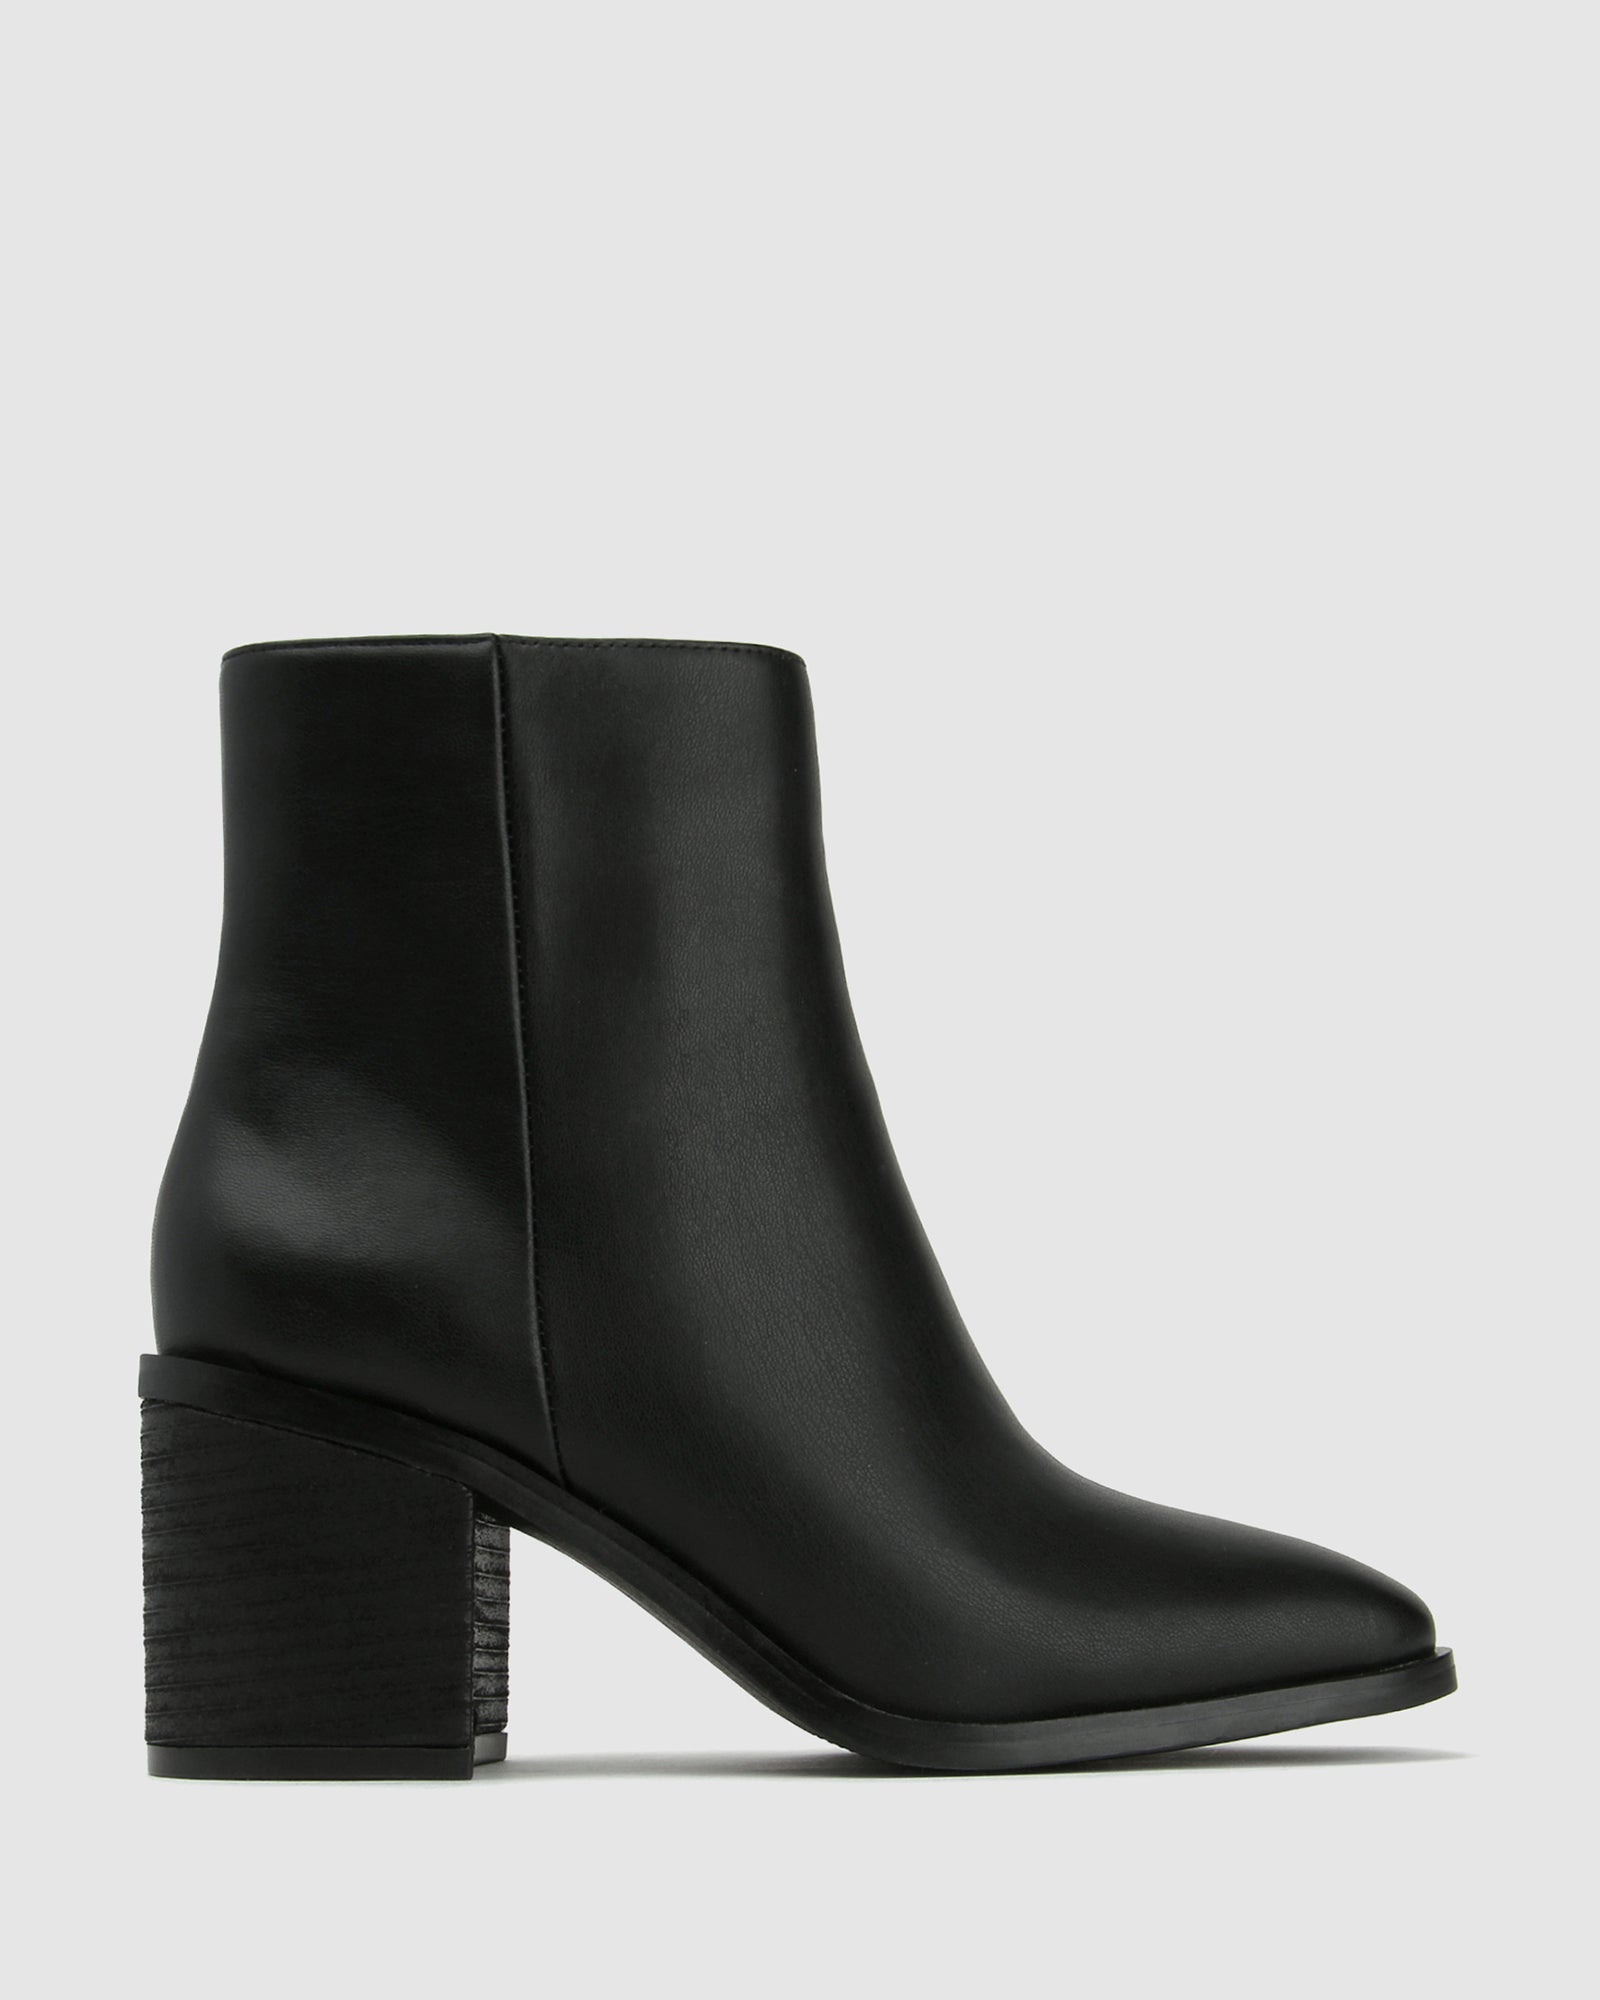 Buy GRACIE Square Toe Block Boots by Zeroe online - Betts